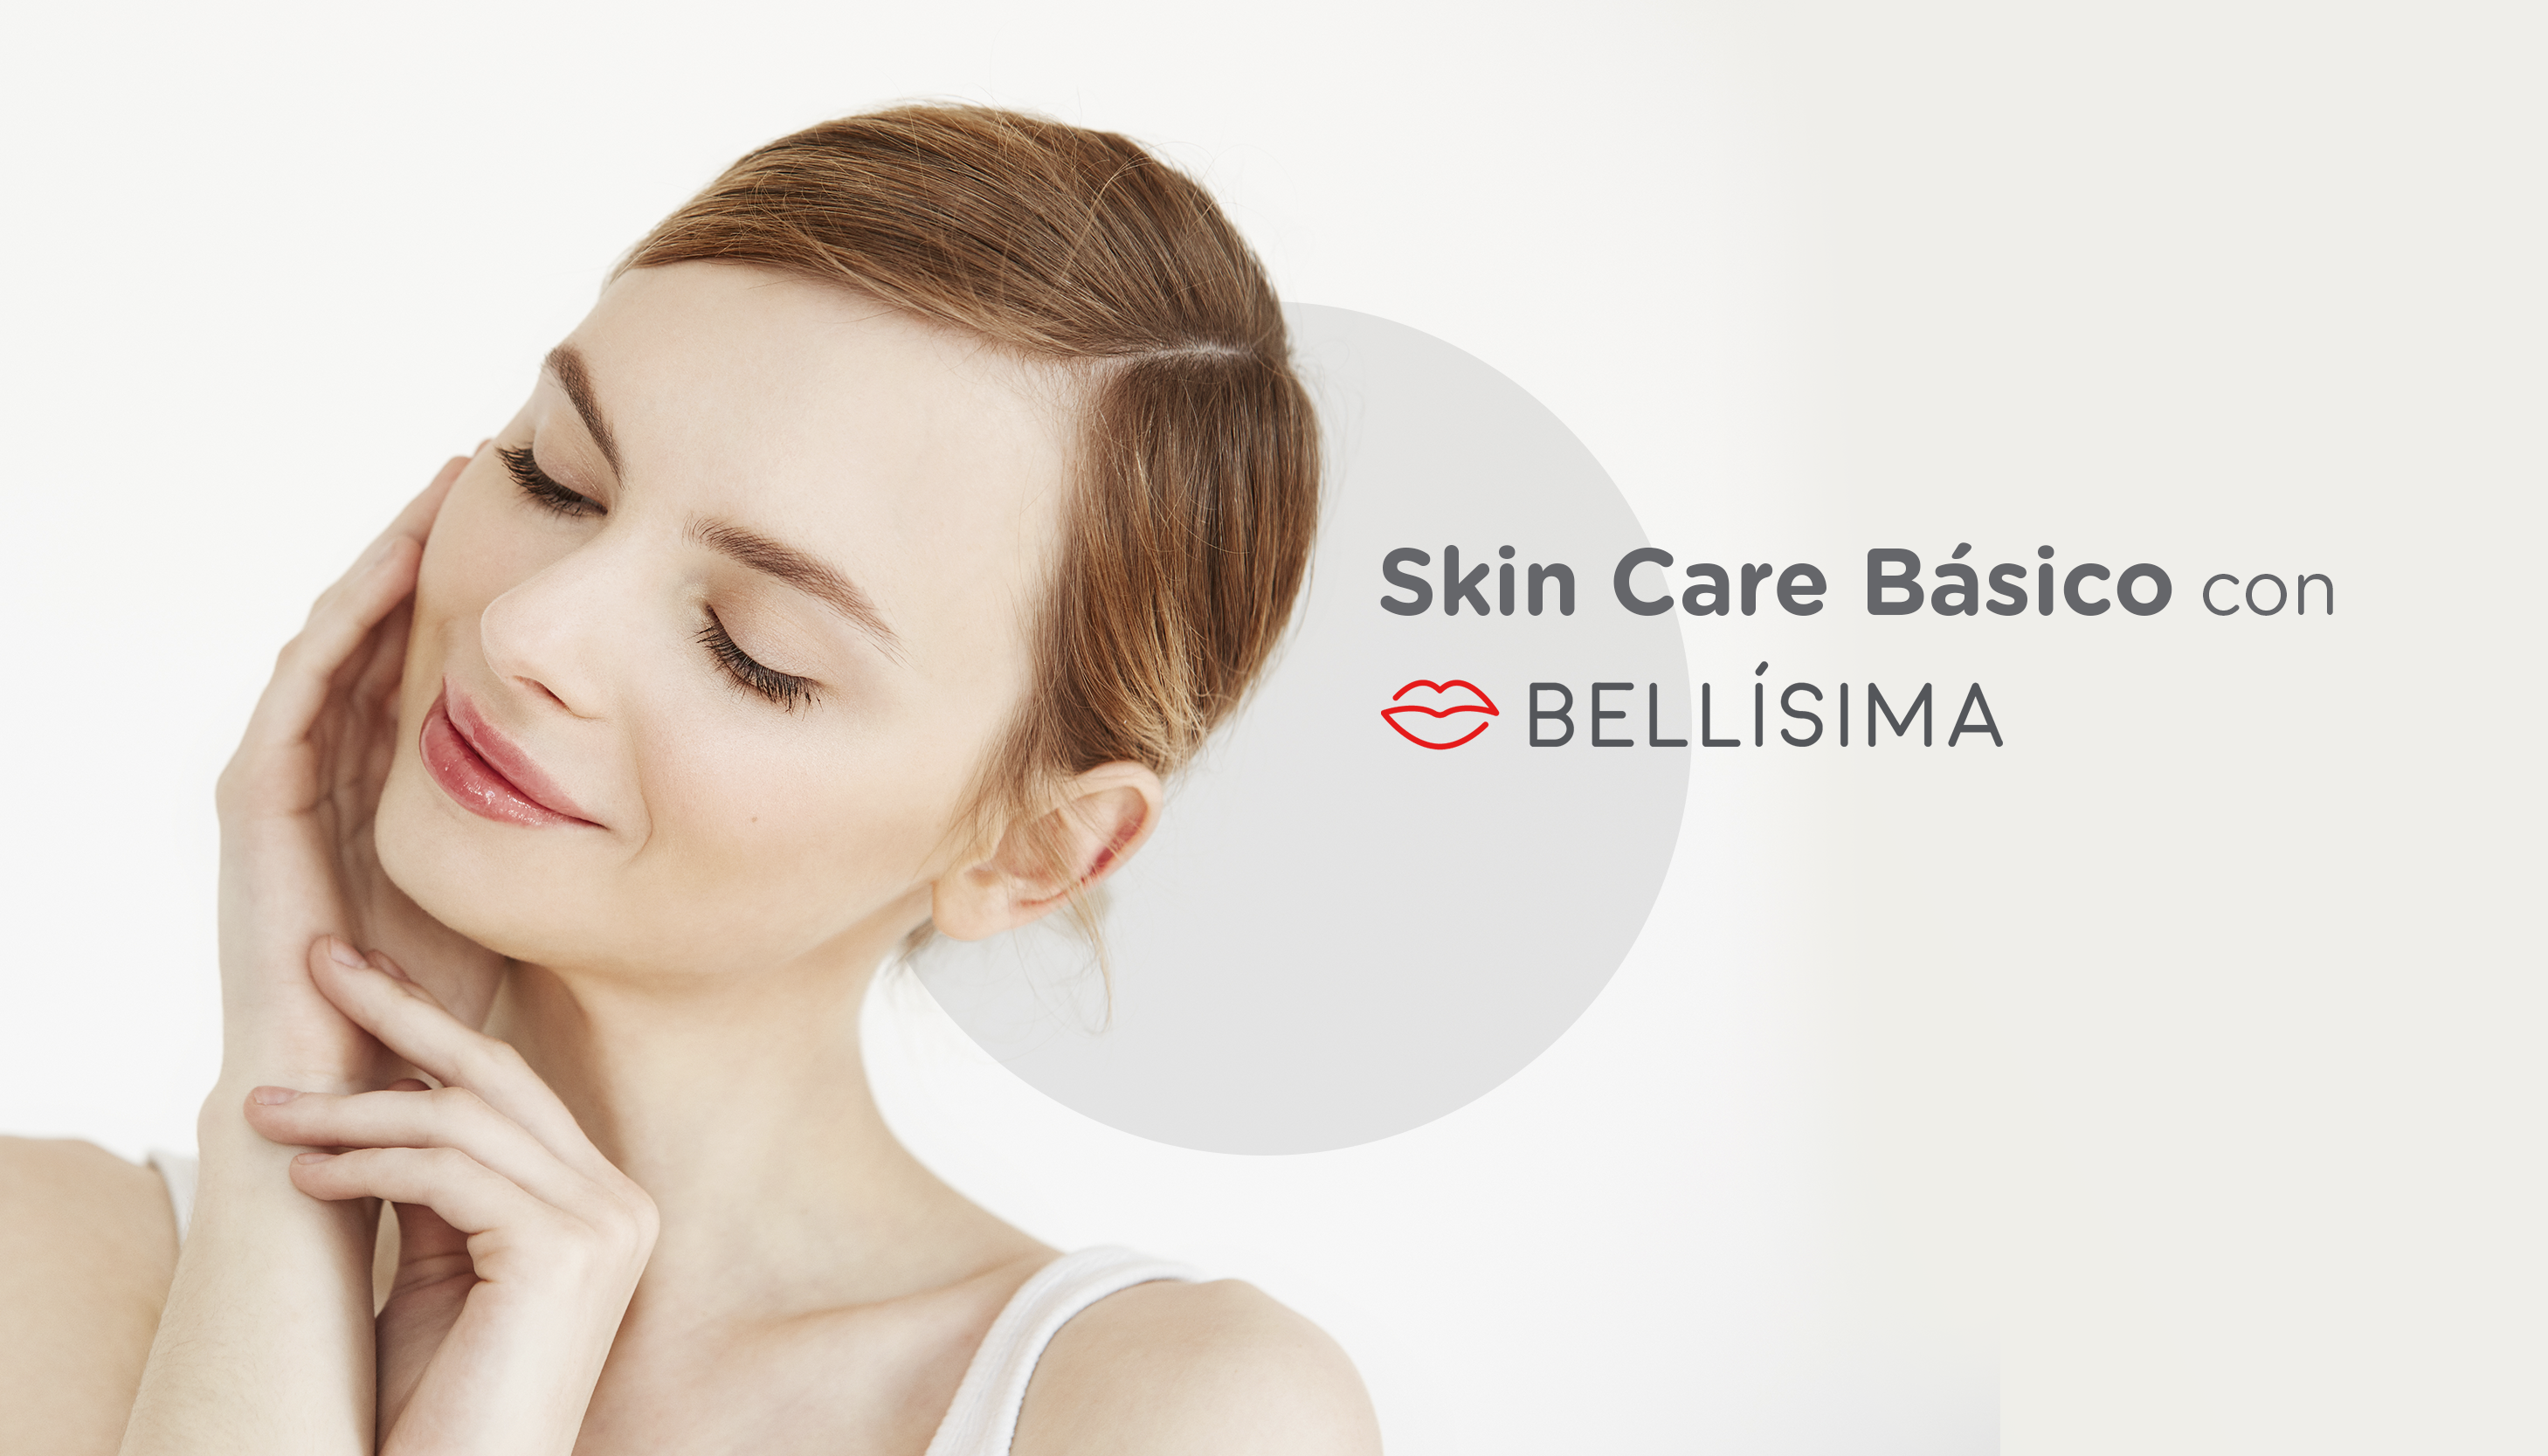 Skin care básico con Bellísima